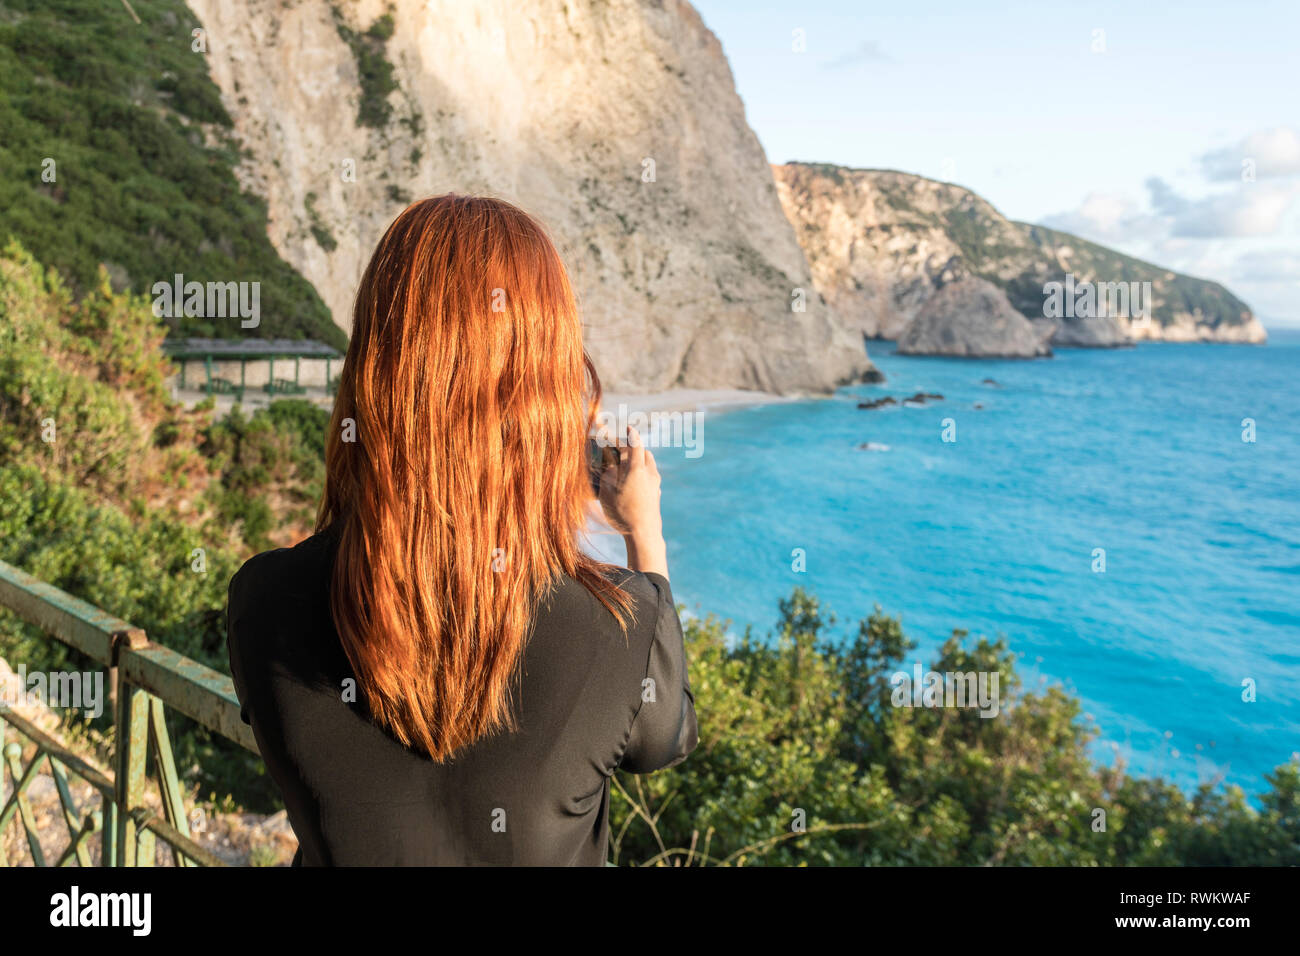 Woman taking photograph of turquoise sea, Lefkada Island, Levkas, Greece Stock Photo